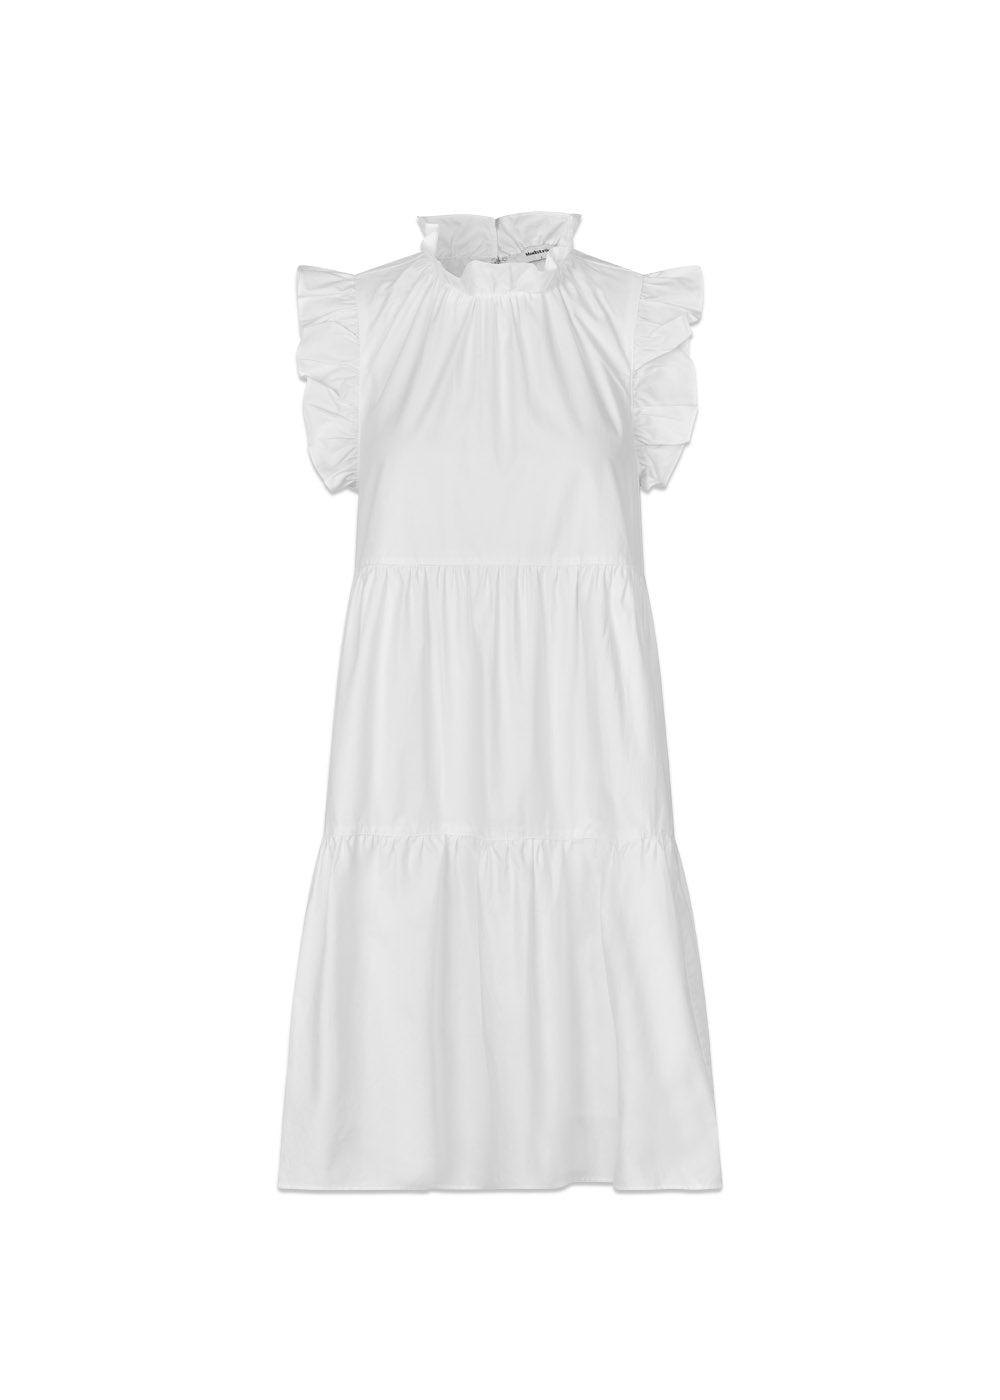 IzakMD Dress - Soft White